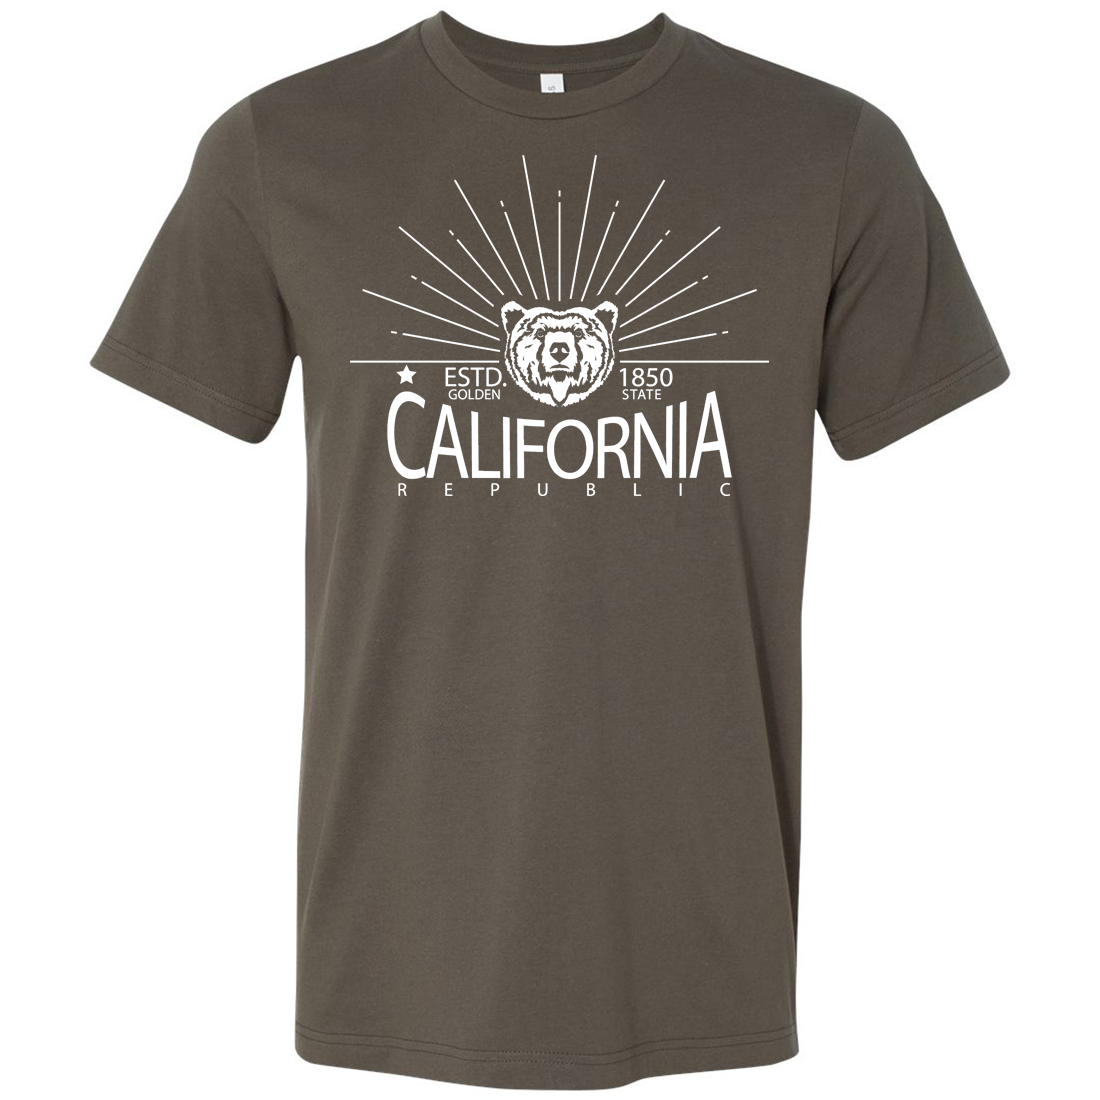 California Golden State White Print Asst Colors Mens Lightweight Fitte ...